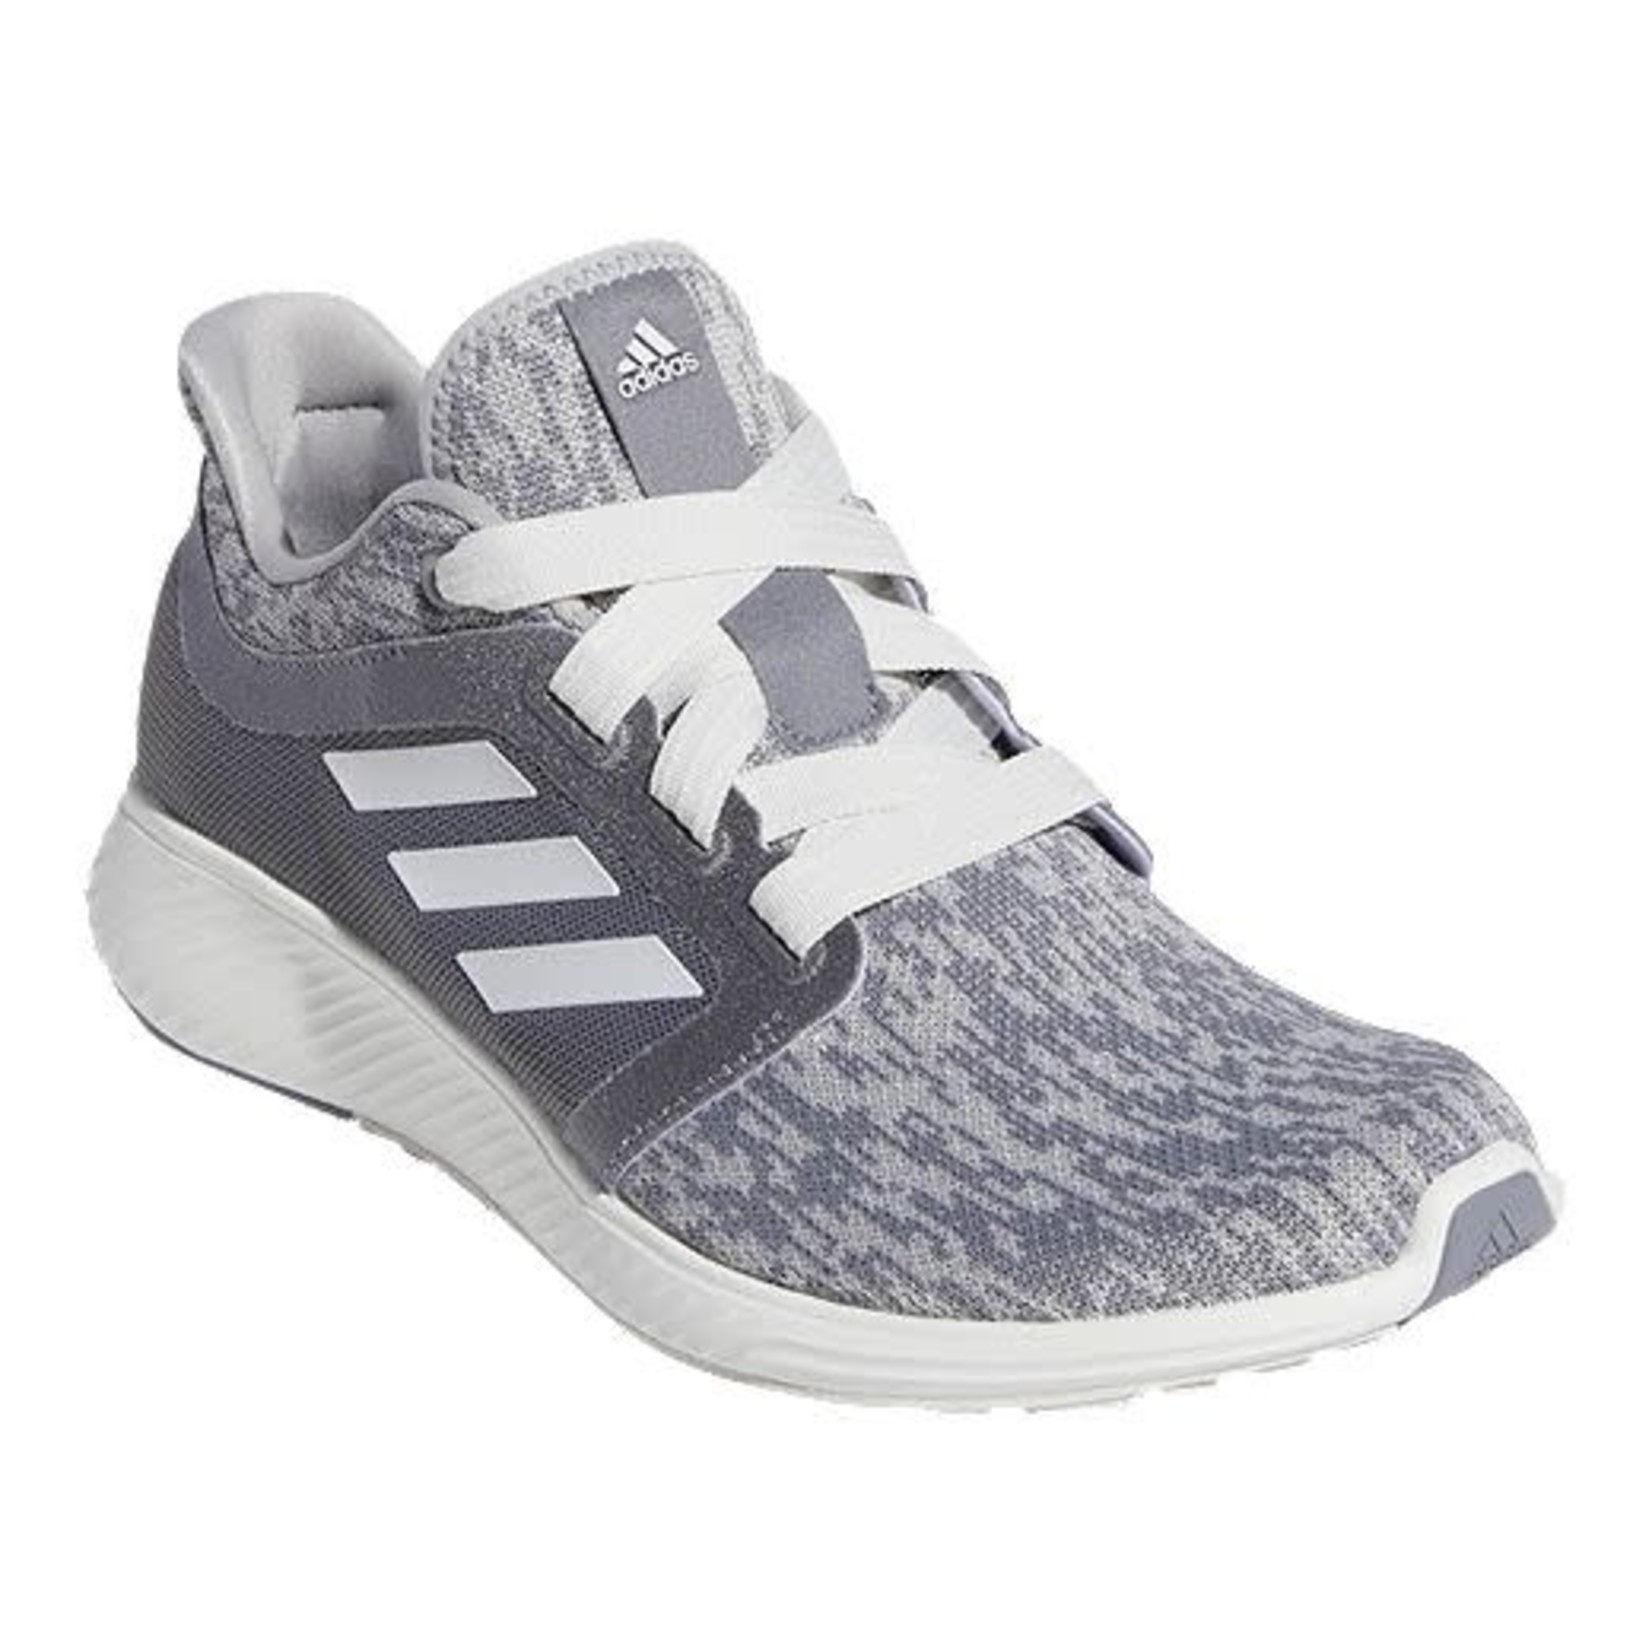 Adidas Adidas Running Shoes, Edge Lux 3, Ladies